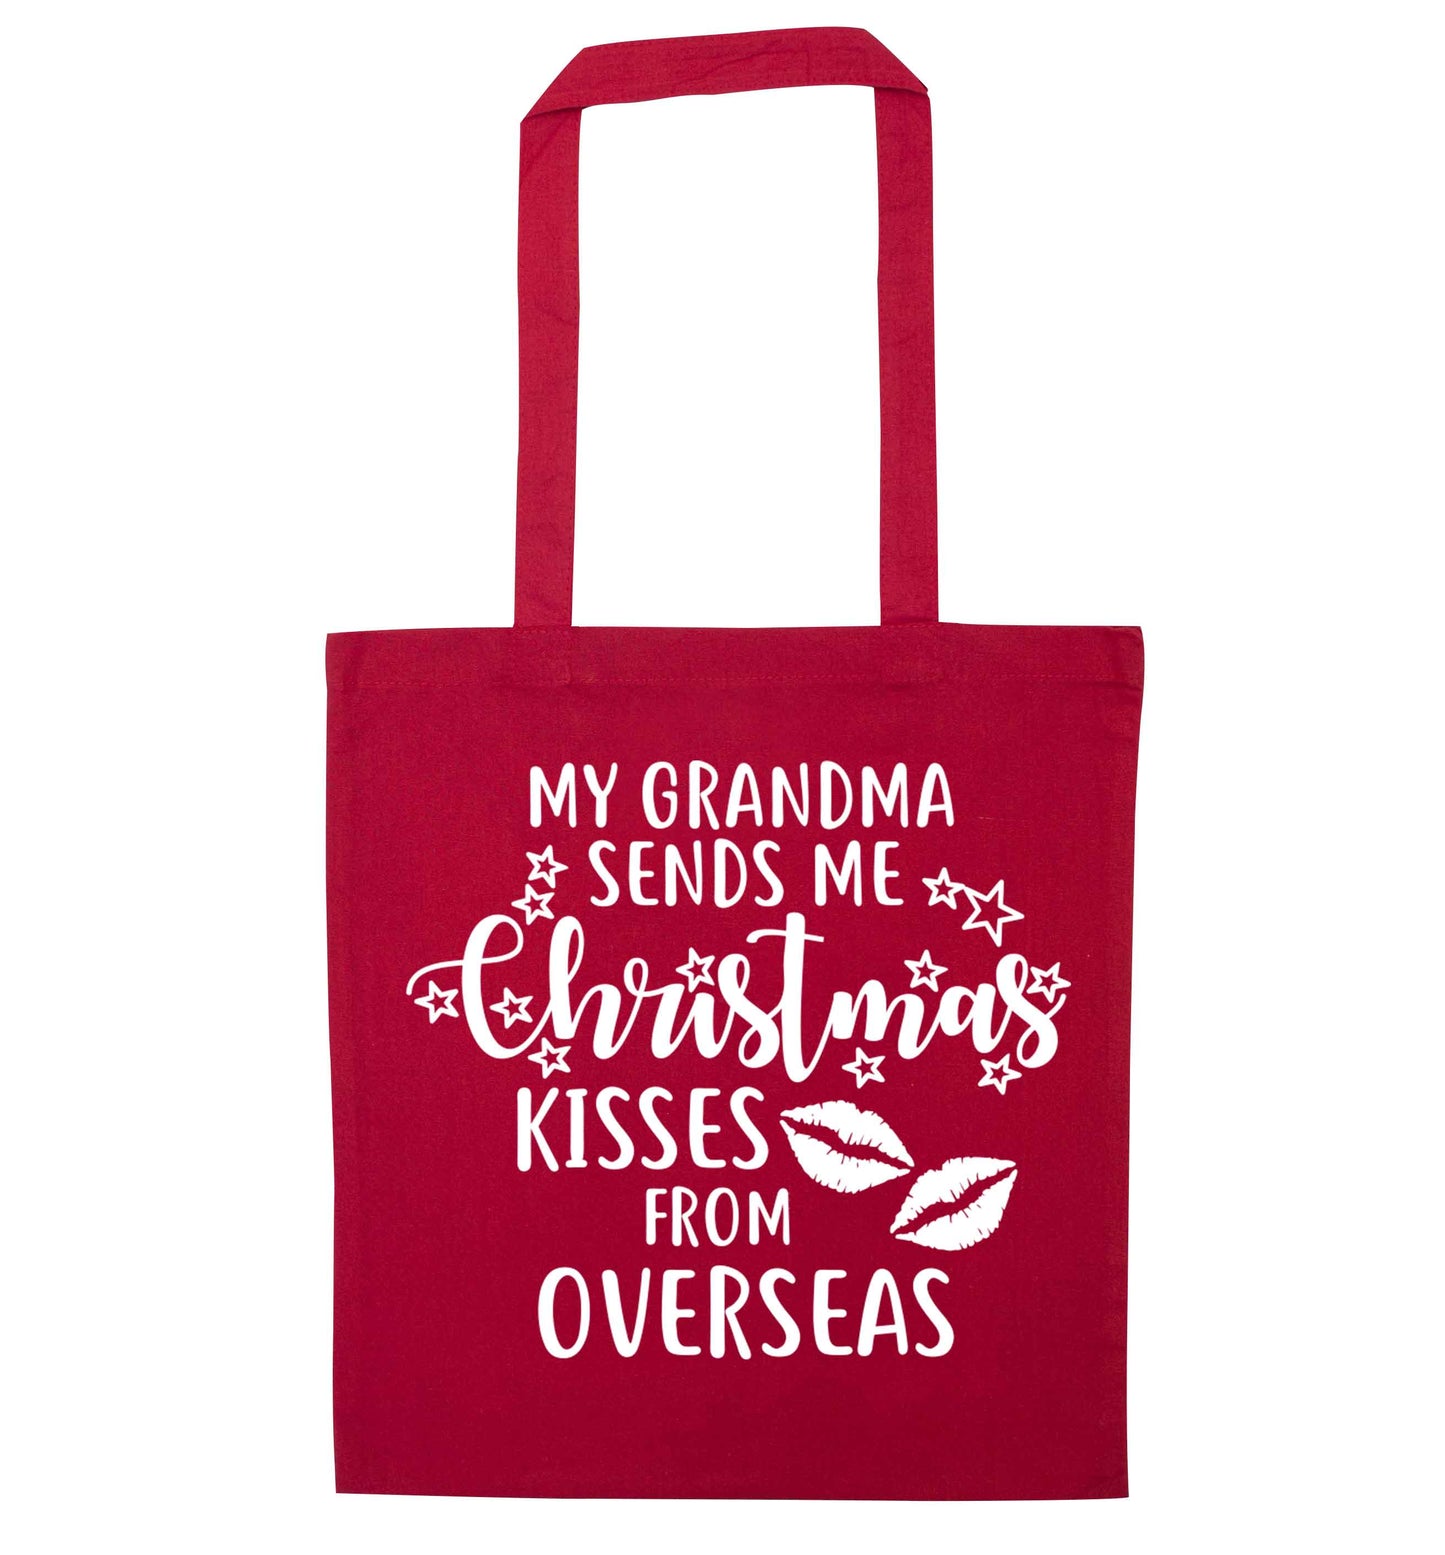 Grandma Christmas Kisses Overseas red tote bag